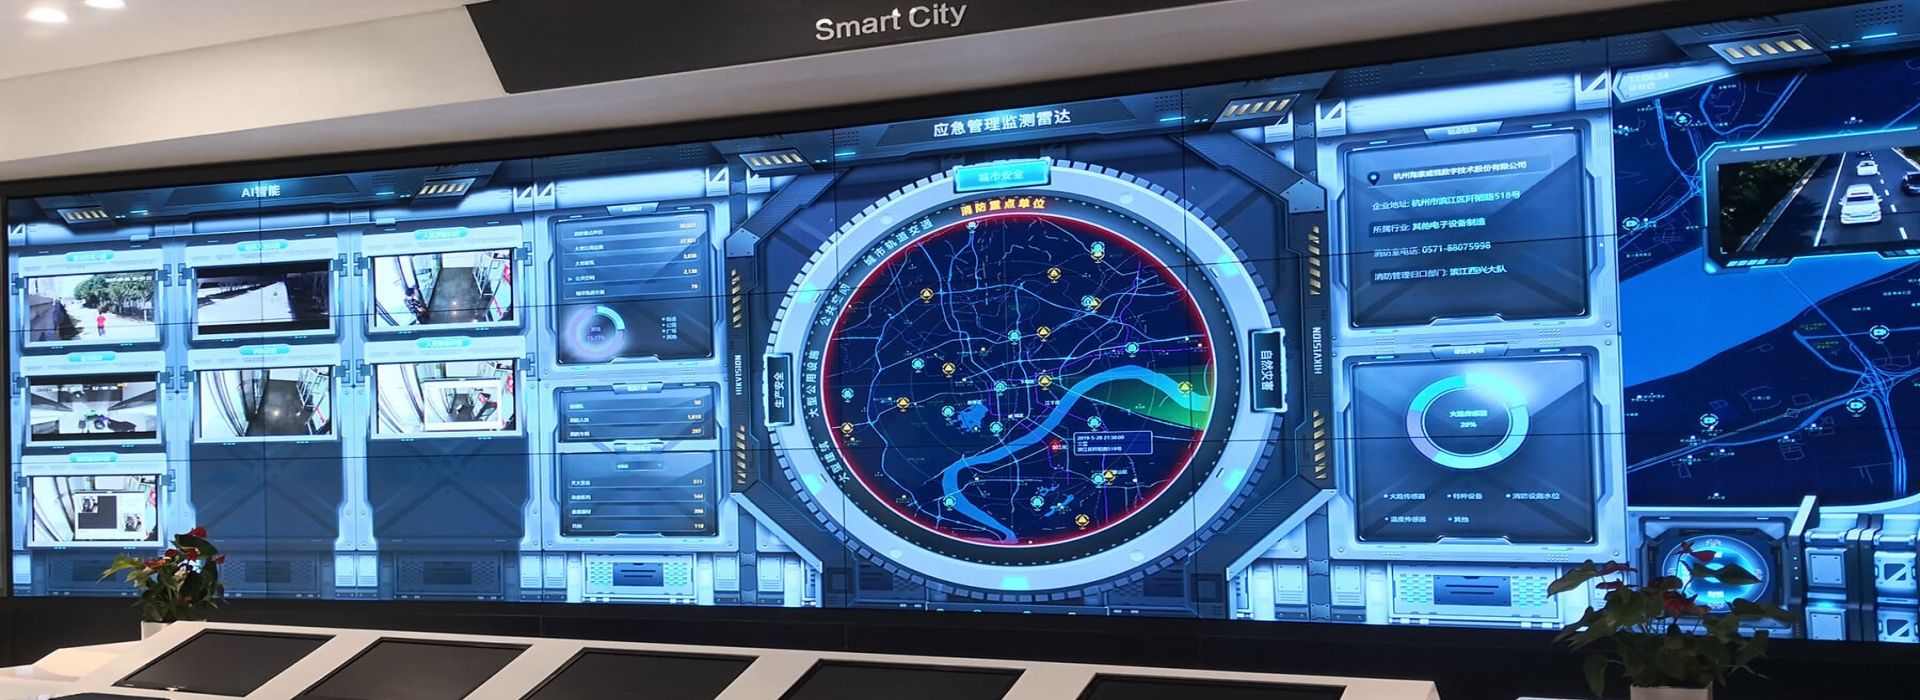 smart city display